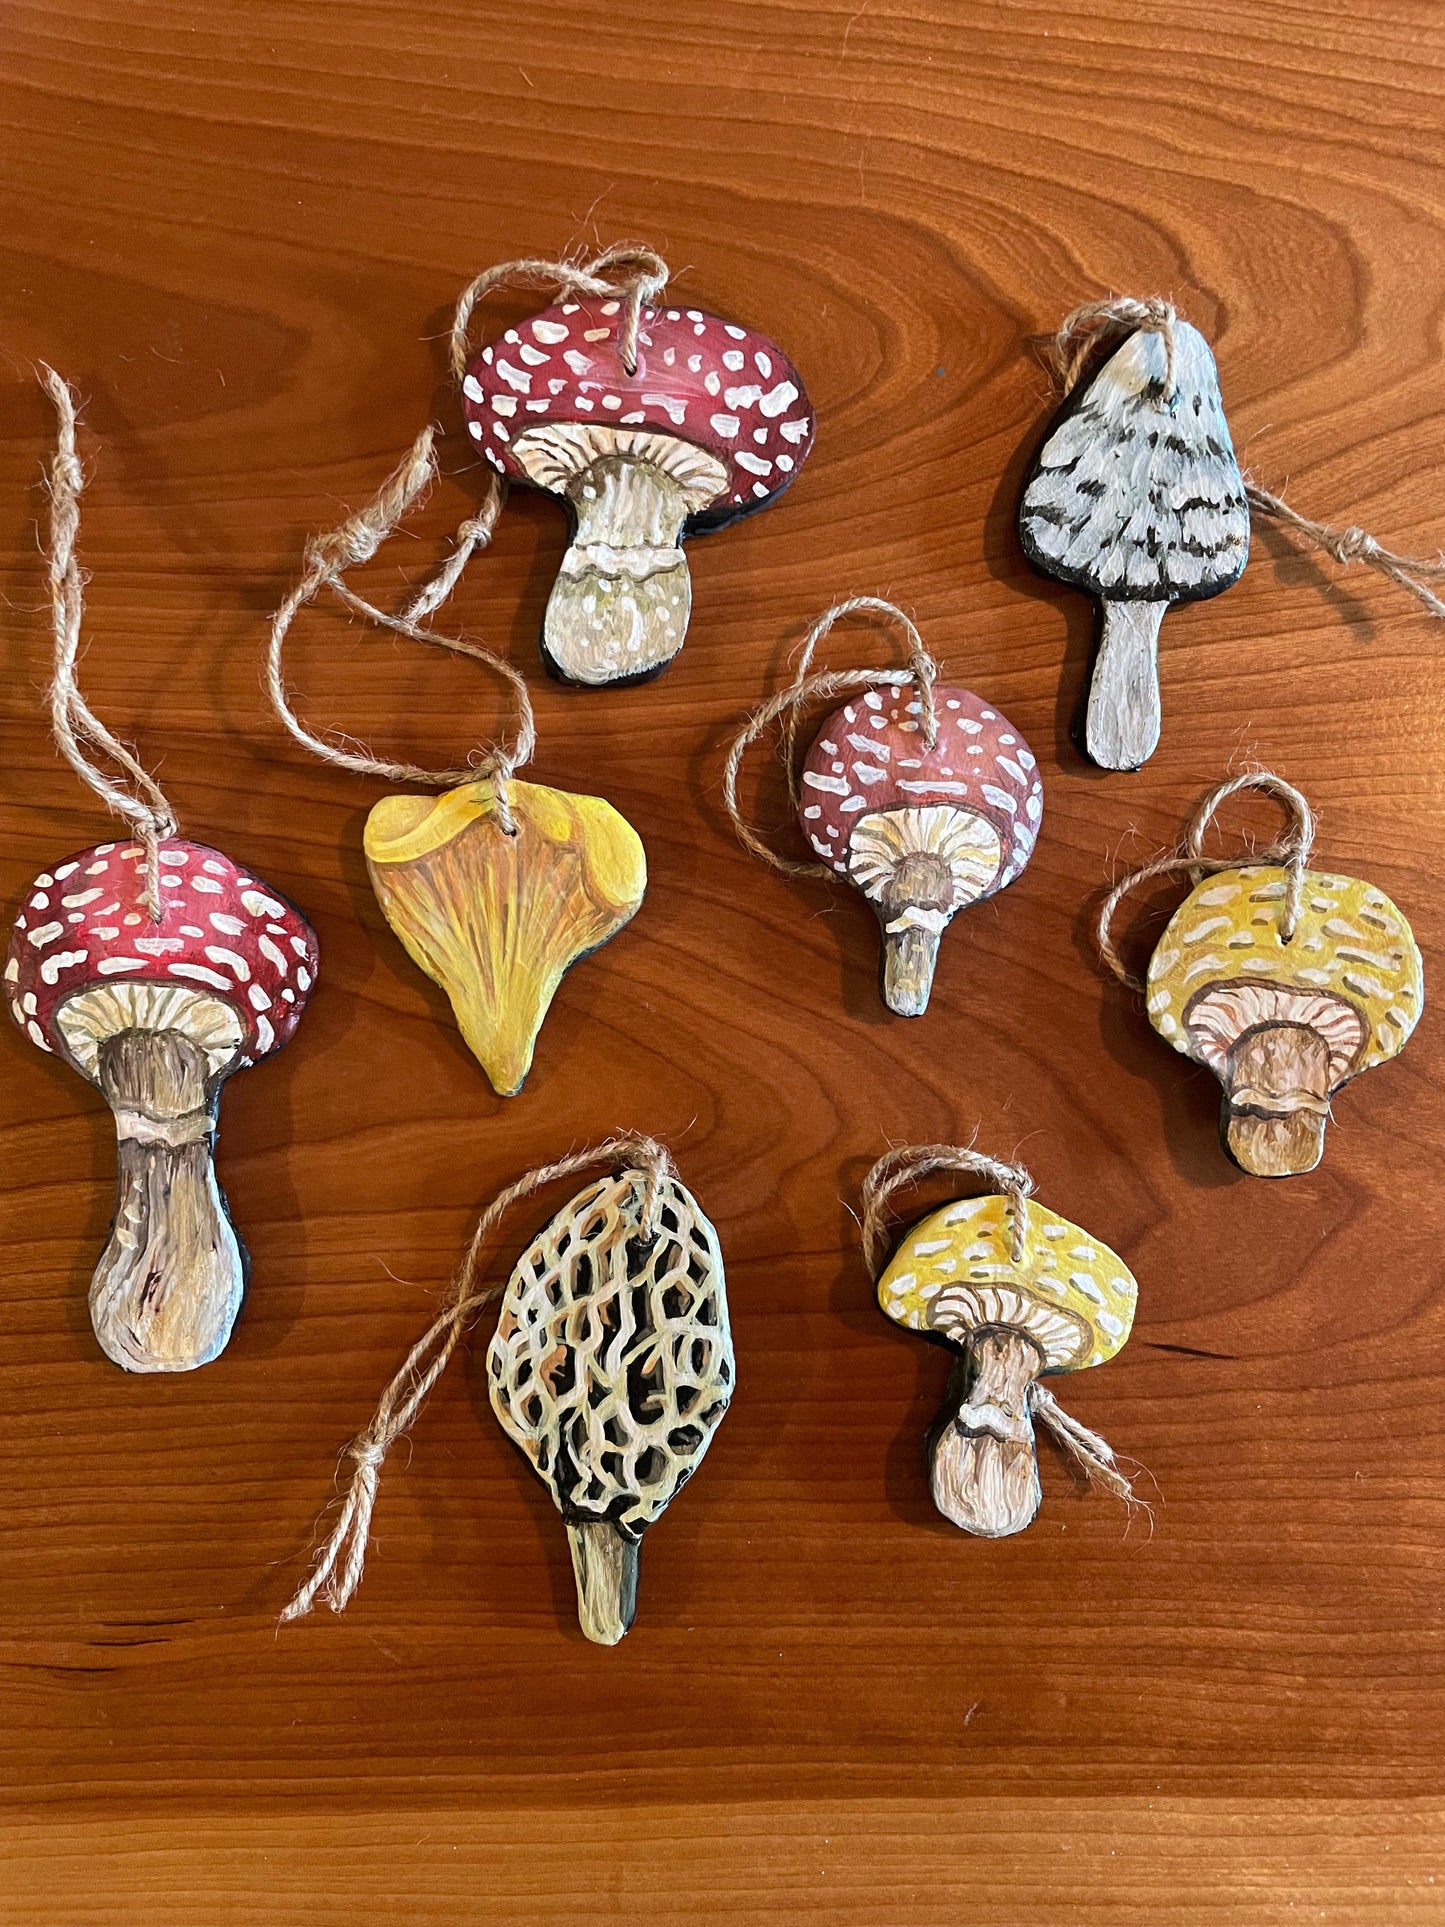 Mushroom Clay Ornament